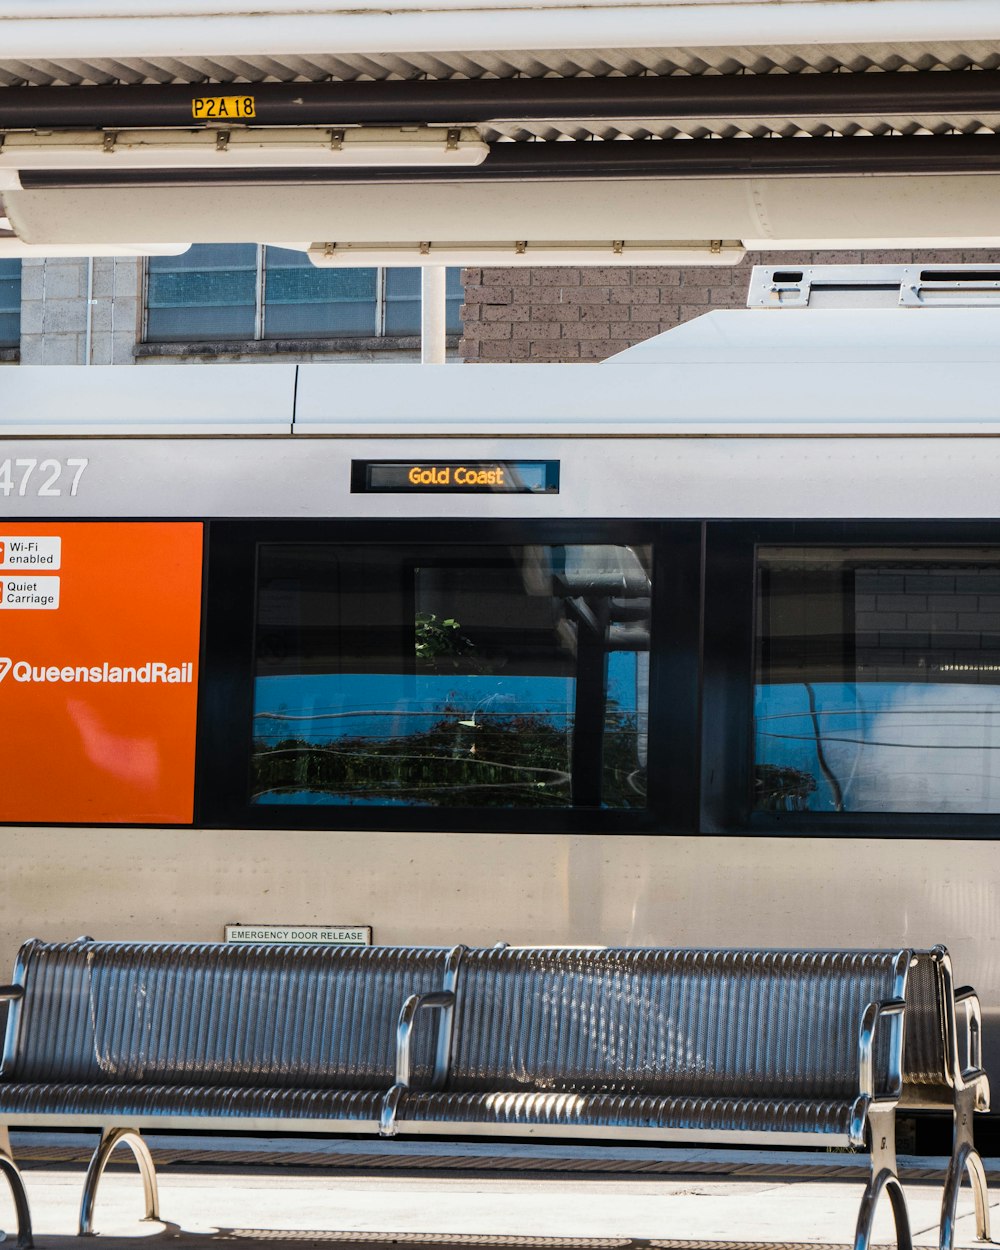 white and orange train during daytime